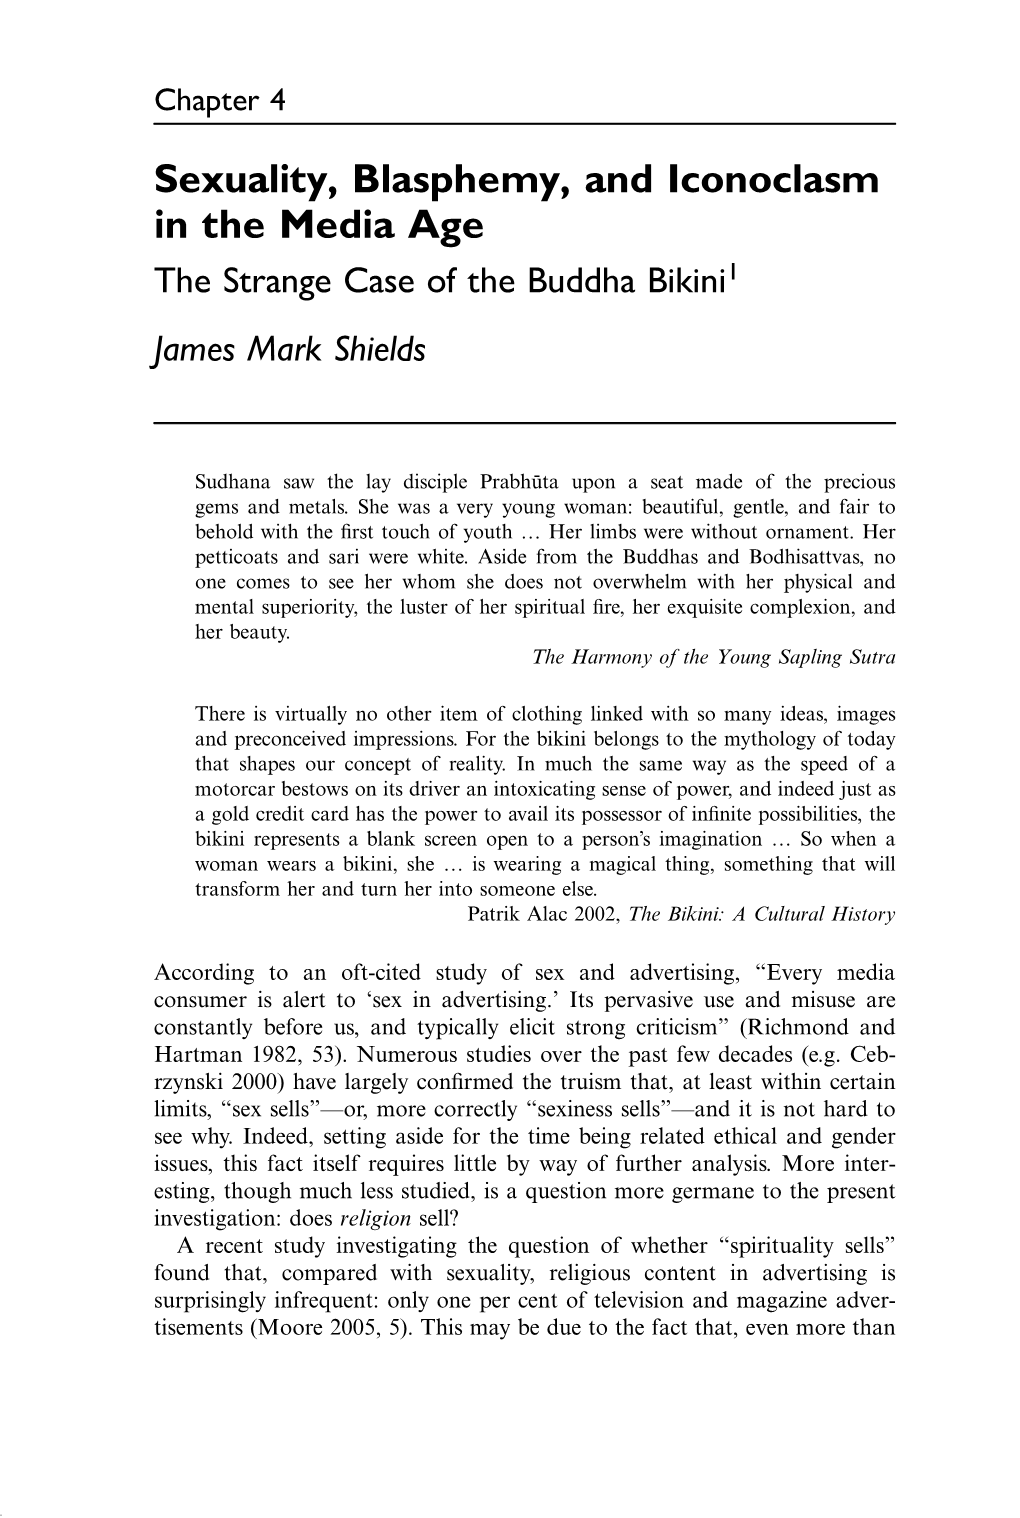 The Strange Case of the Buddha Bikini1 James Mark Shields